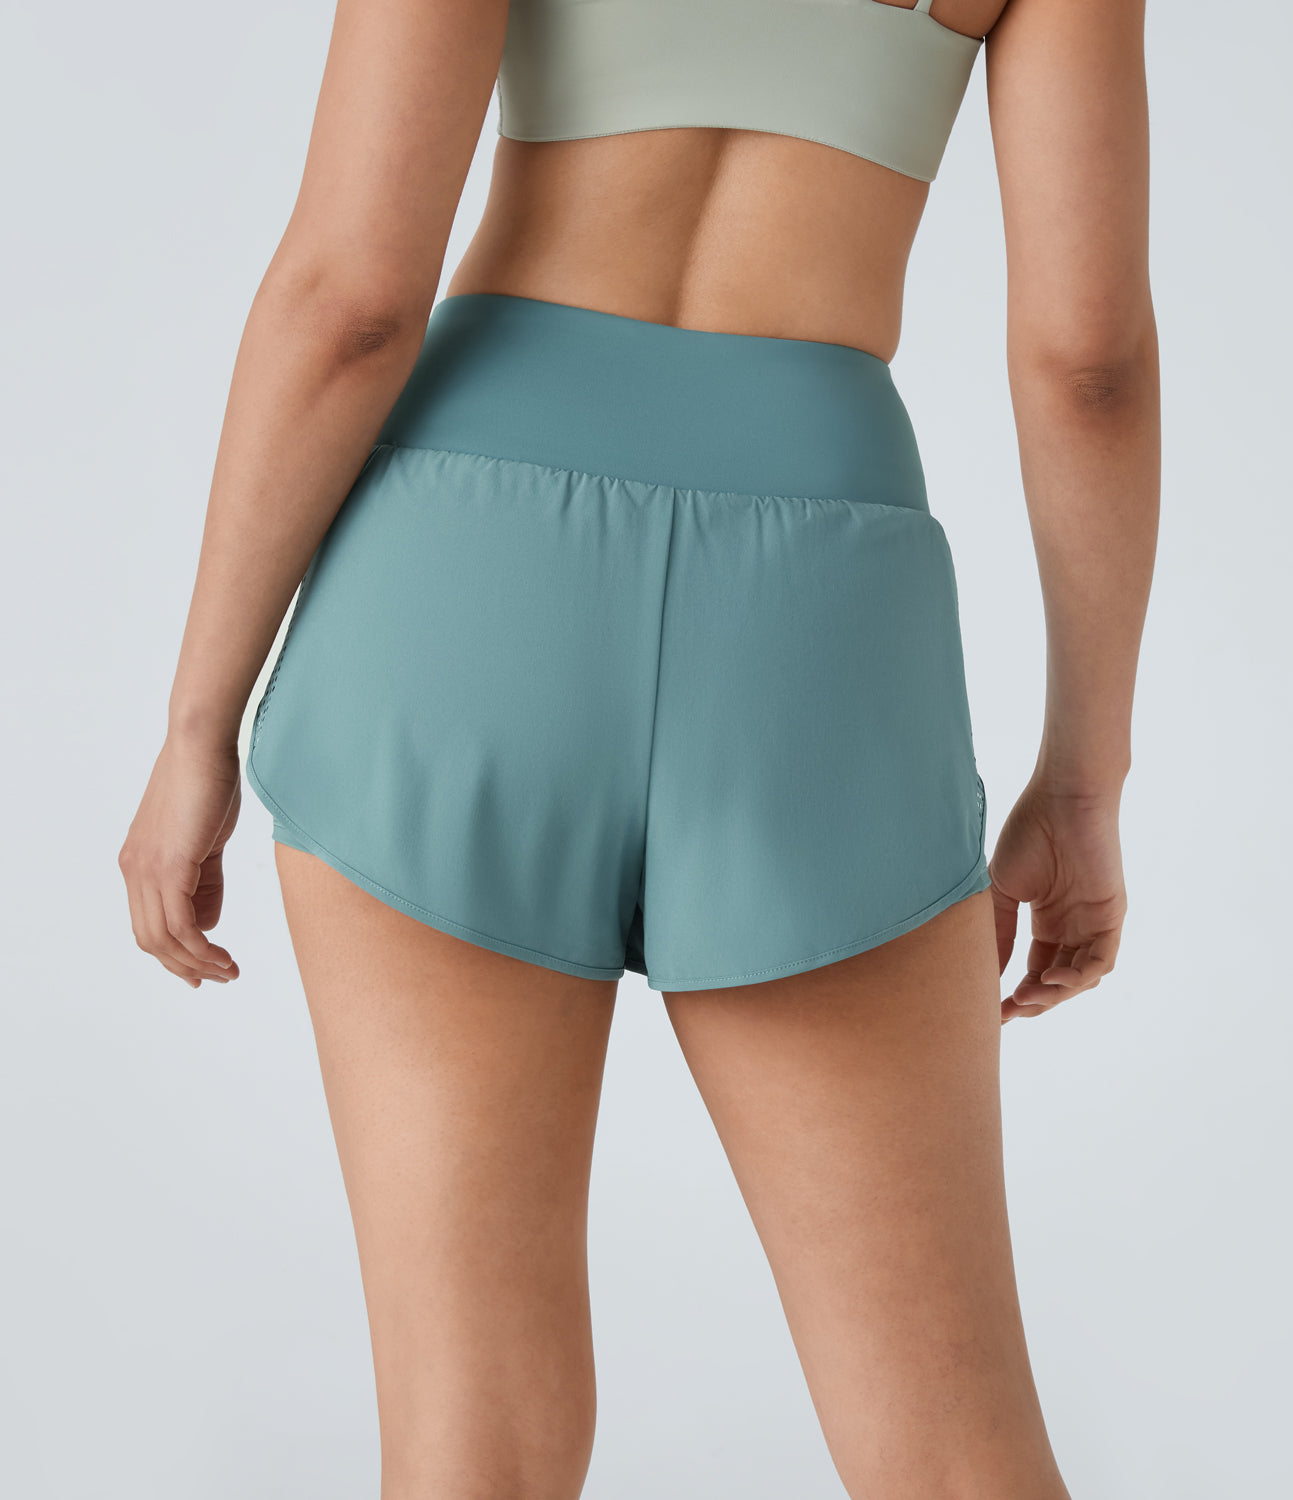 

Halara Breezefulв„ў High Waisted Mesh 2-in-1 Side Pocket Quick Dry Yoga Shorts Gym Short - Stone Blue -  booty shorts compression shorts